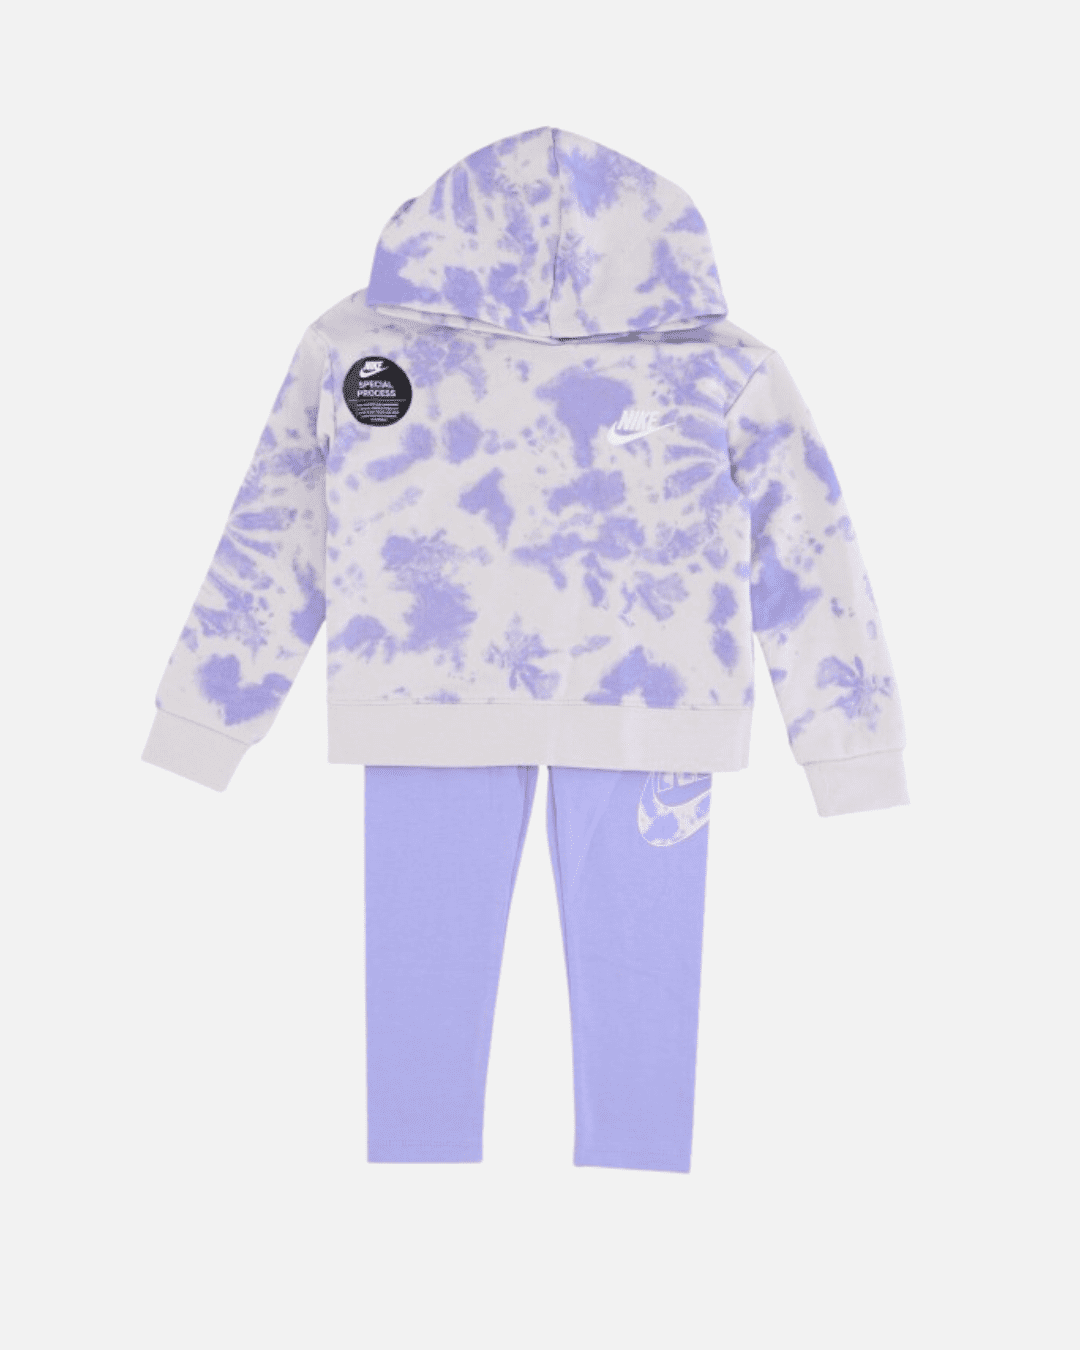 Ensemble Nike Cloud Wash Enfant - Violet/Blanc